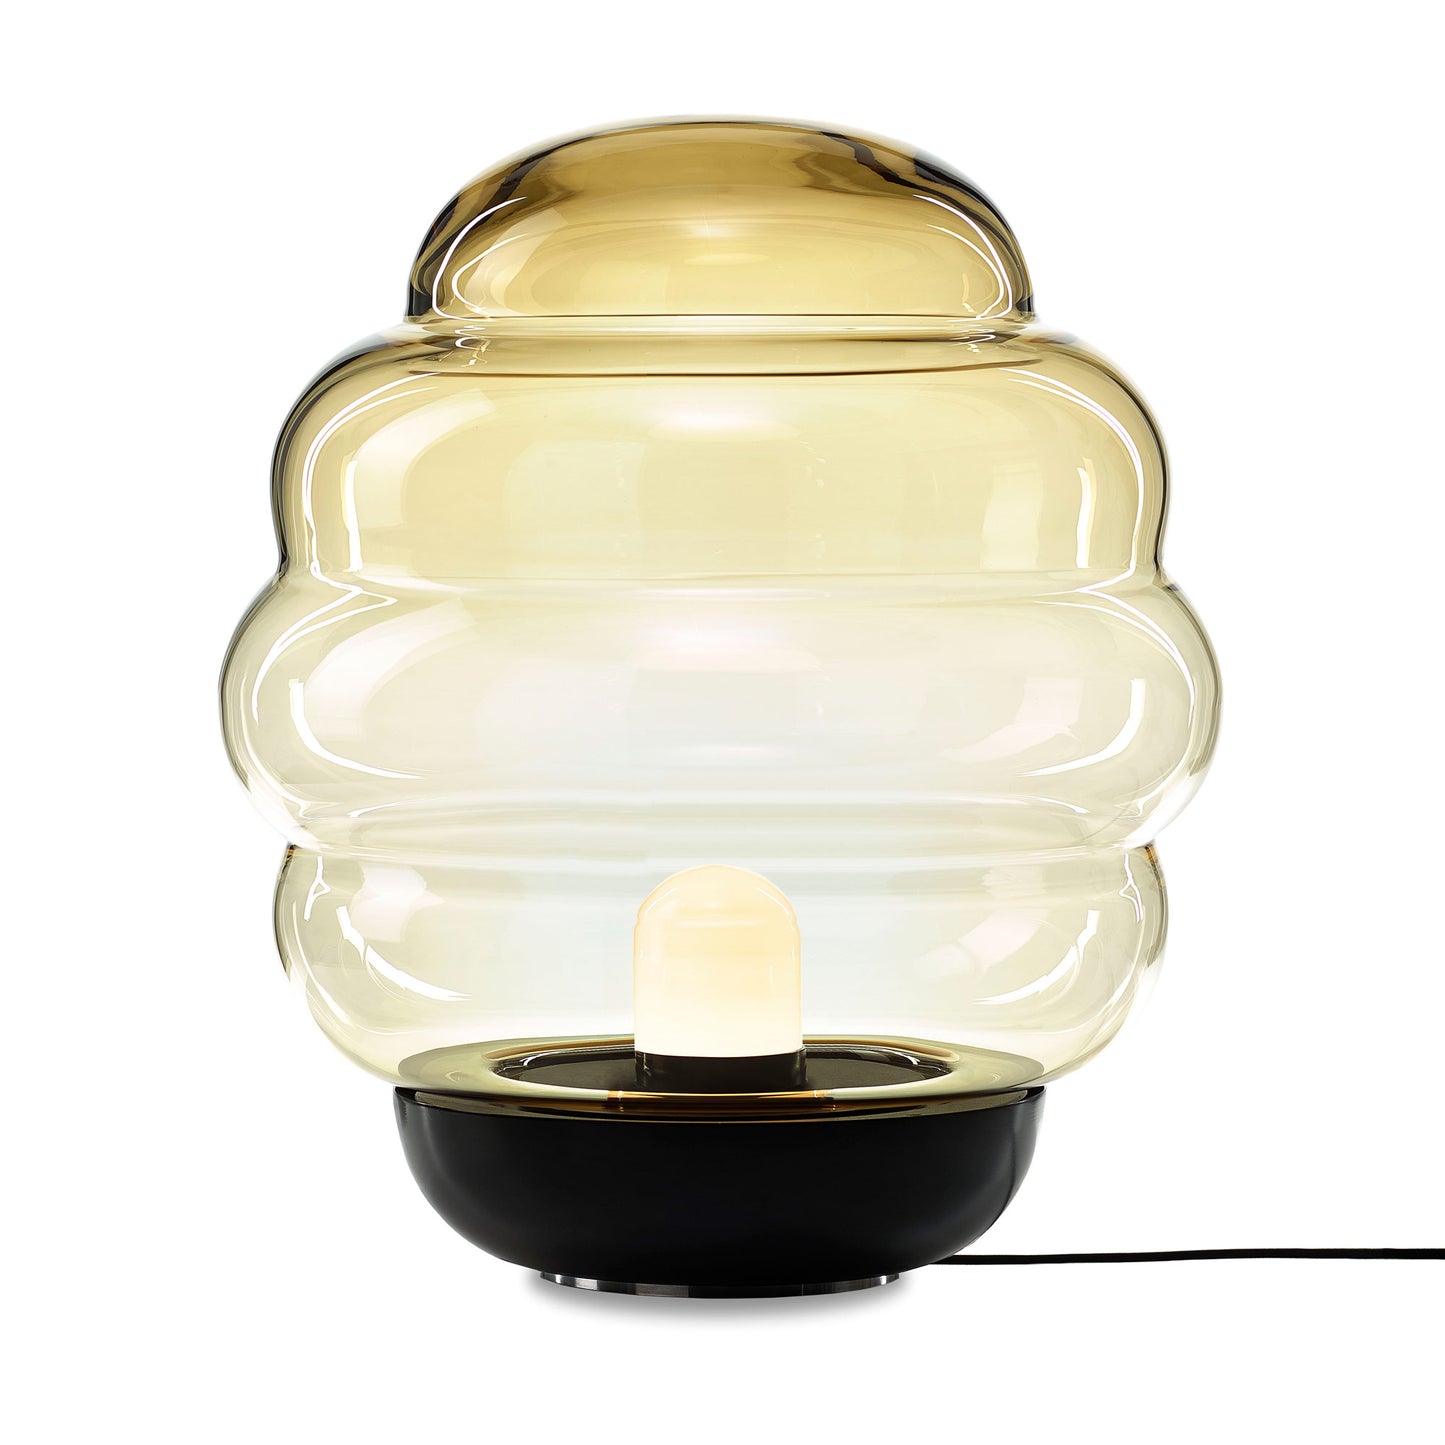 BOMMA - BLIMP FLOOR LAMP LARGE - from $4,218.50